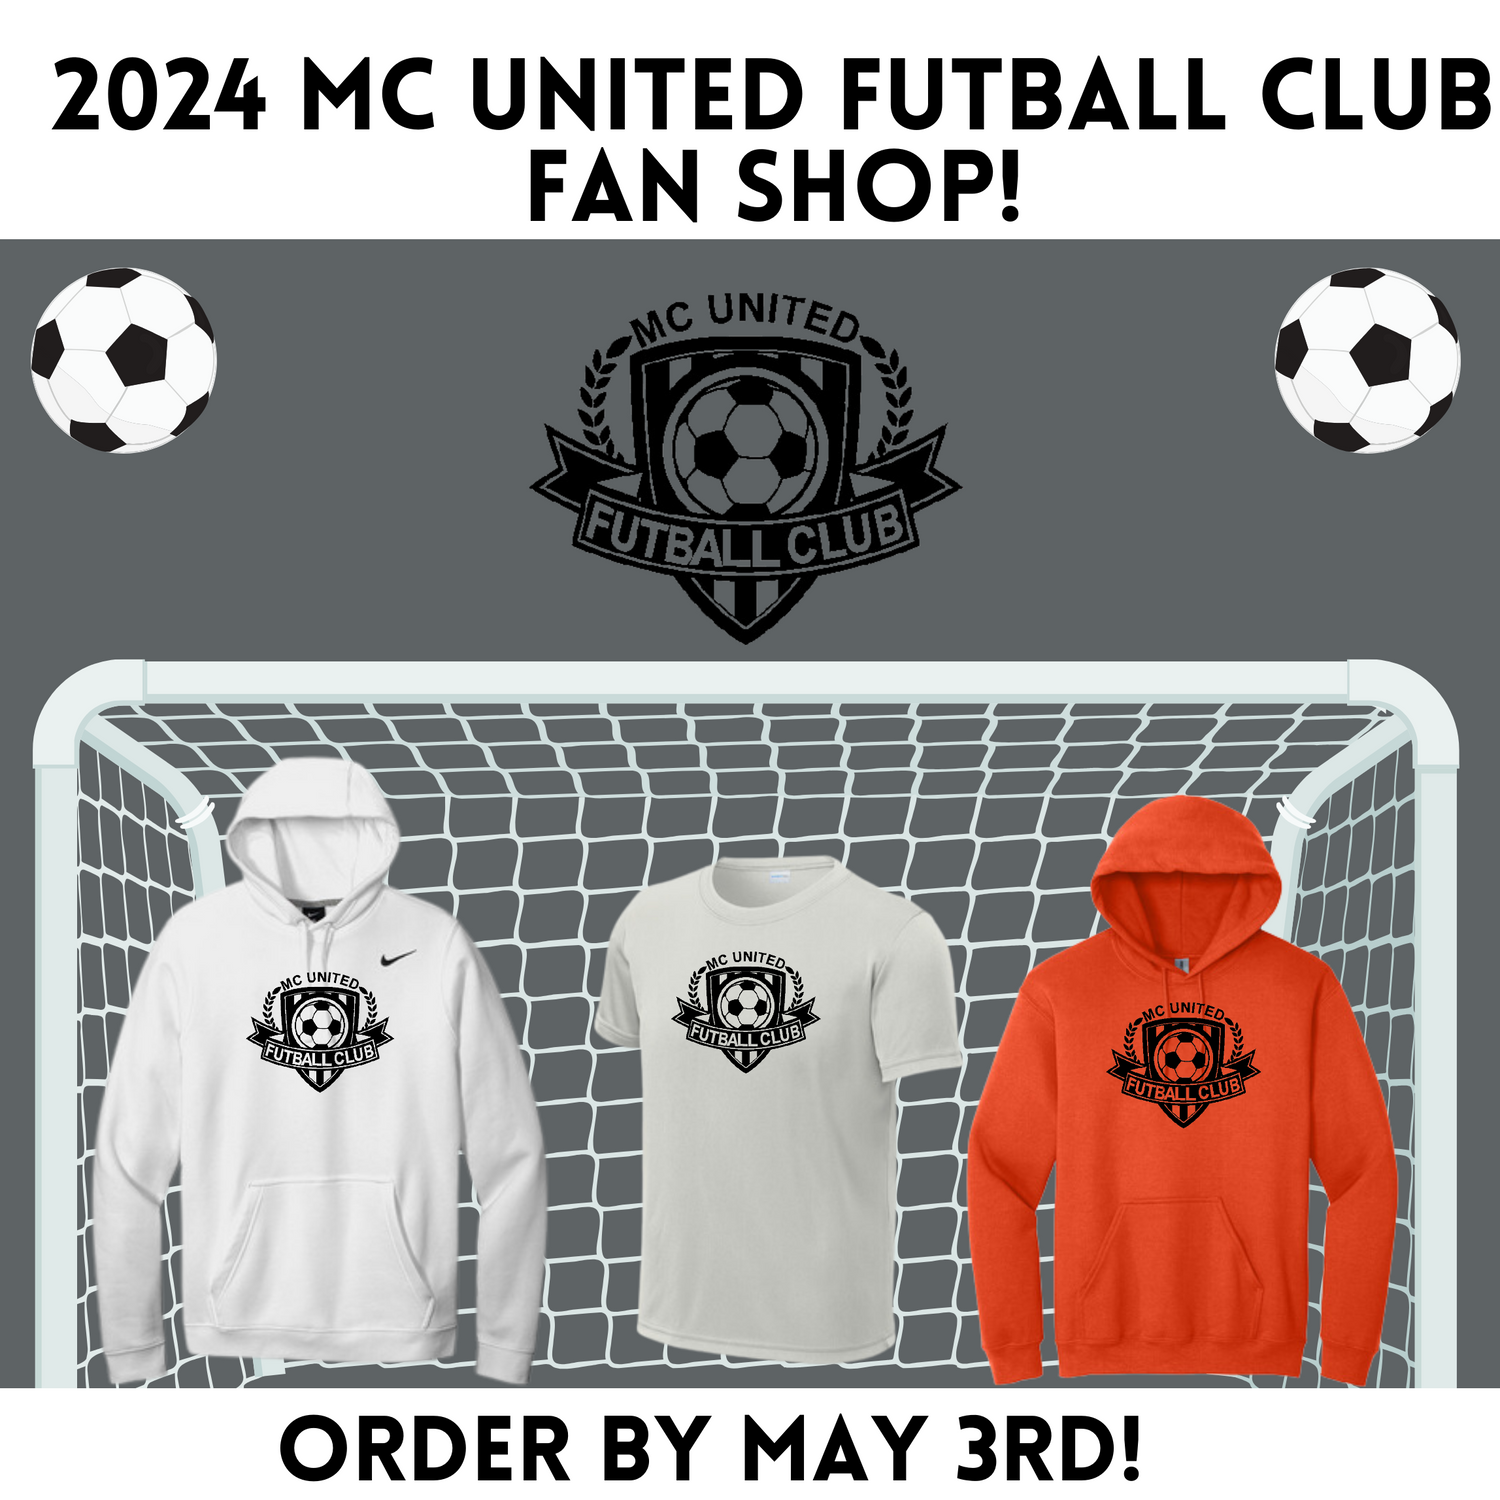 MC United Futball Club